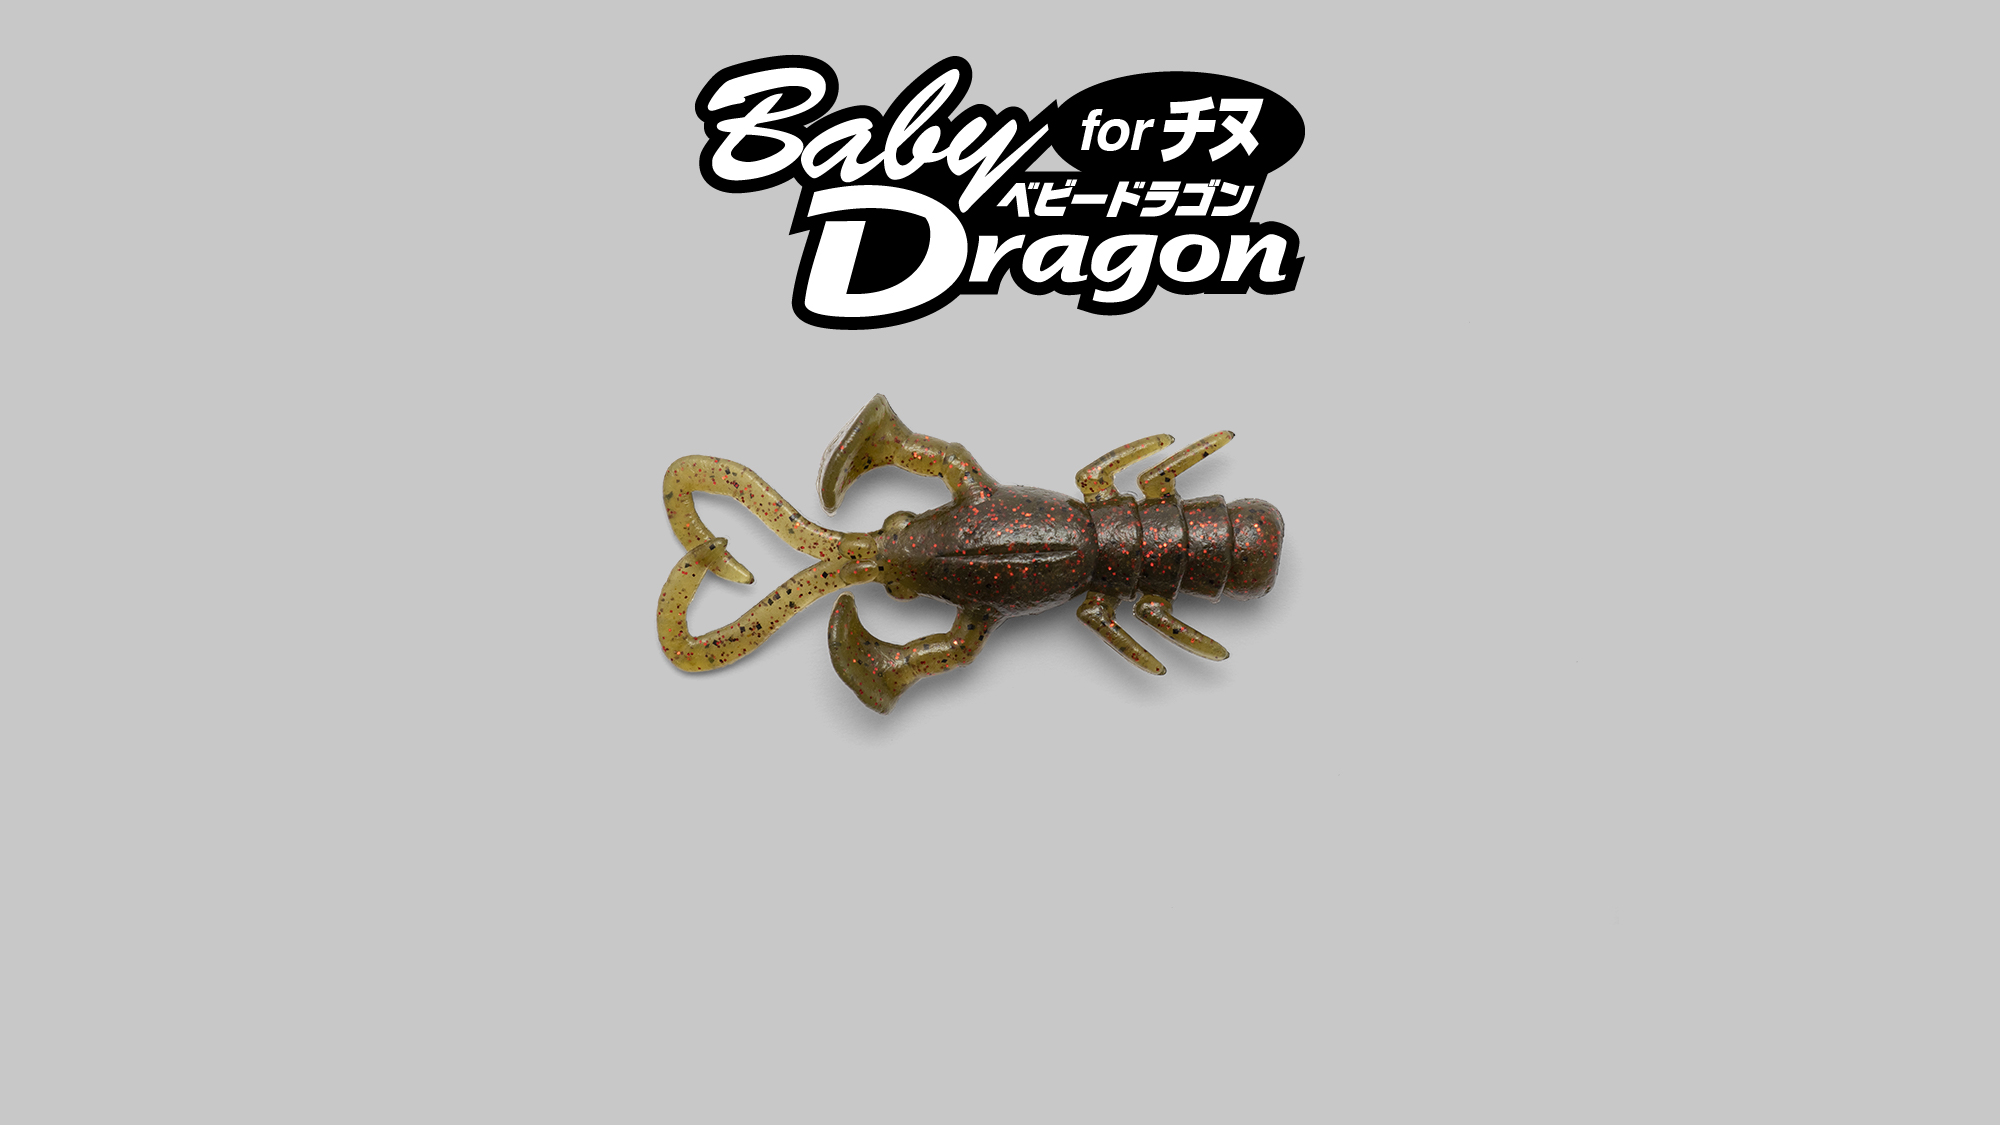  BABY DRAGON 2″ for KURODAI / ベビードラゴン 2″クロダイver